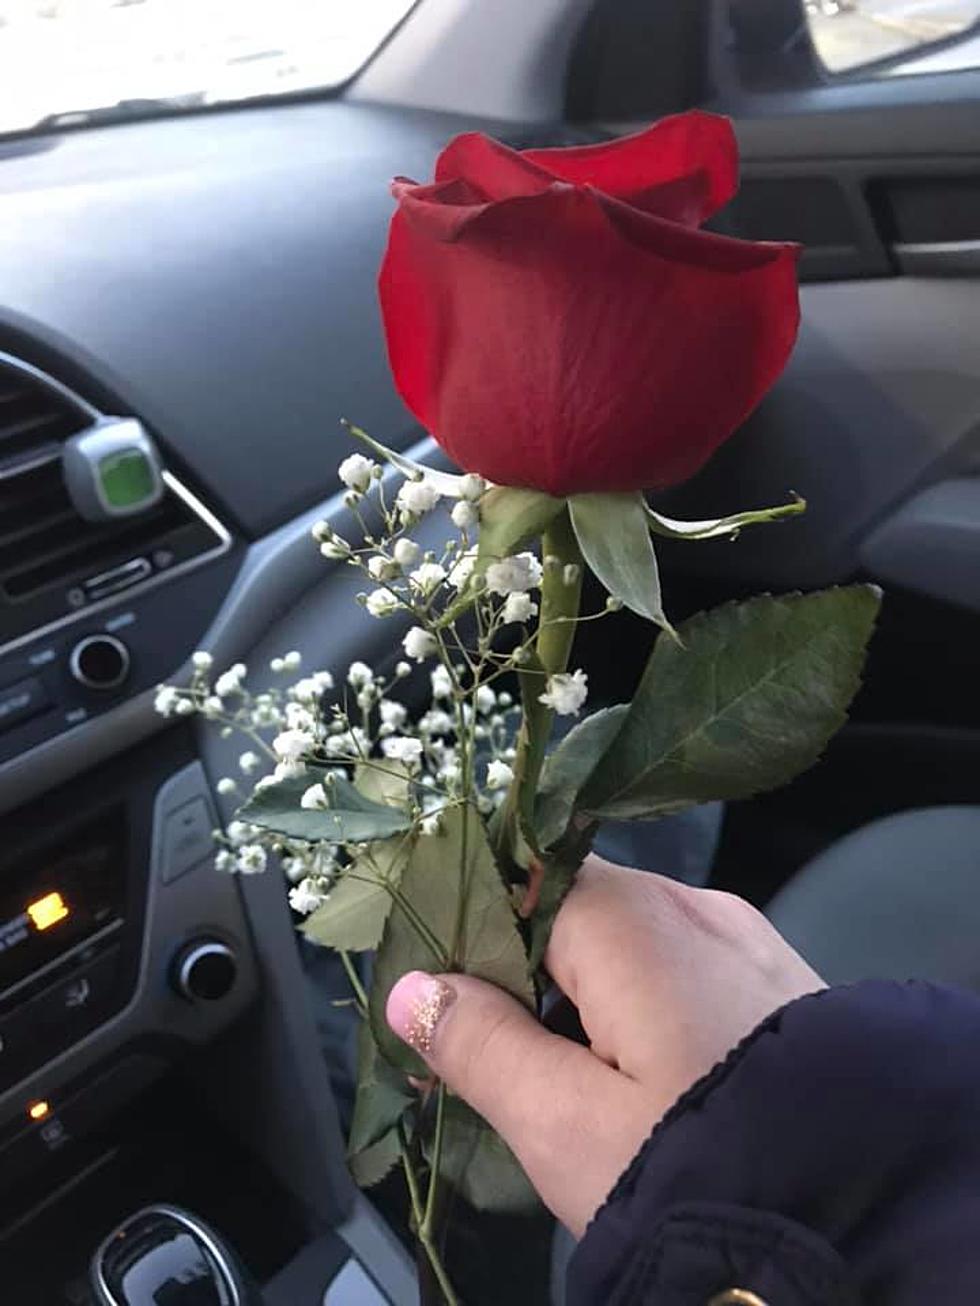 Utica Flower Shop Sends Appreciation and Flowers to St. Luke’s Staff